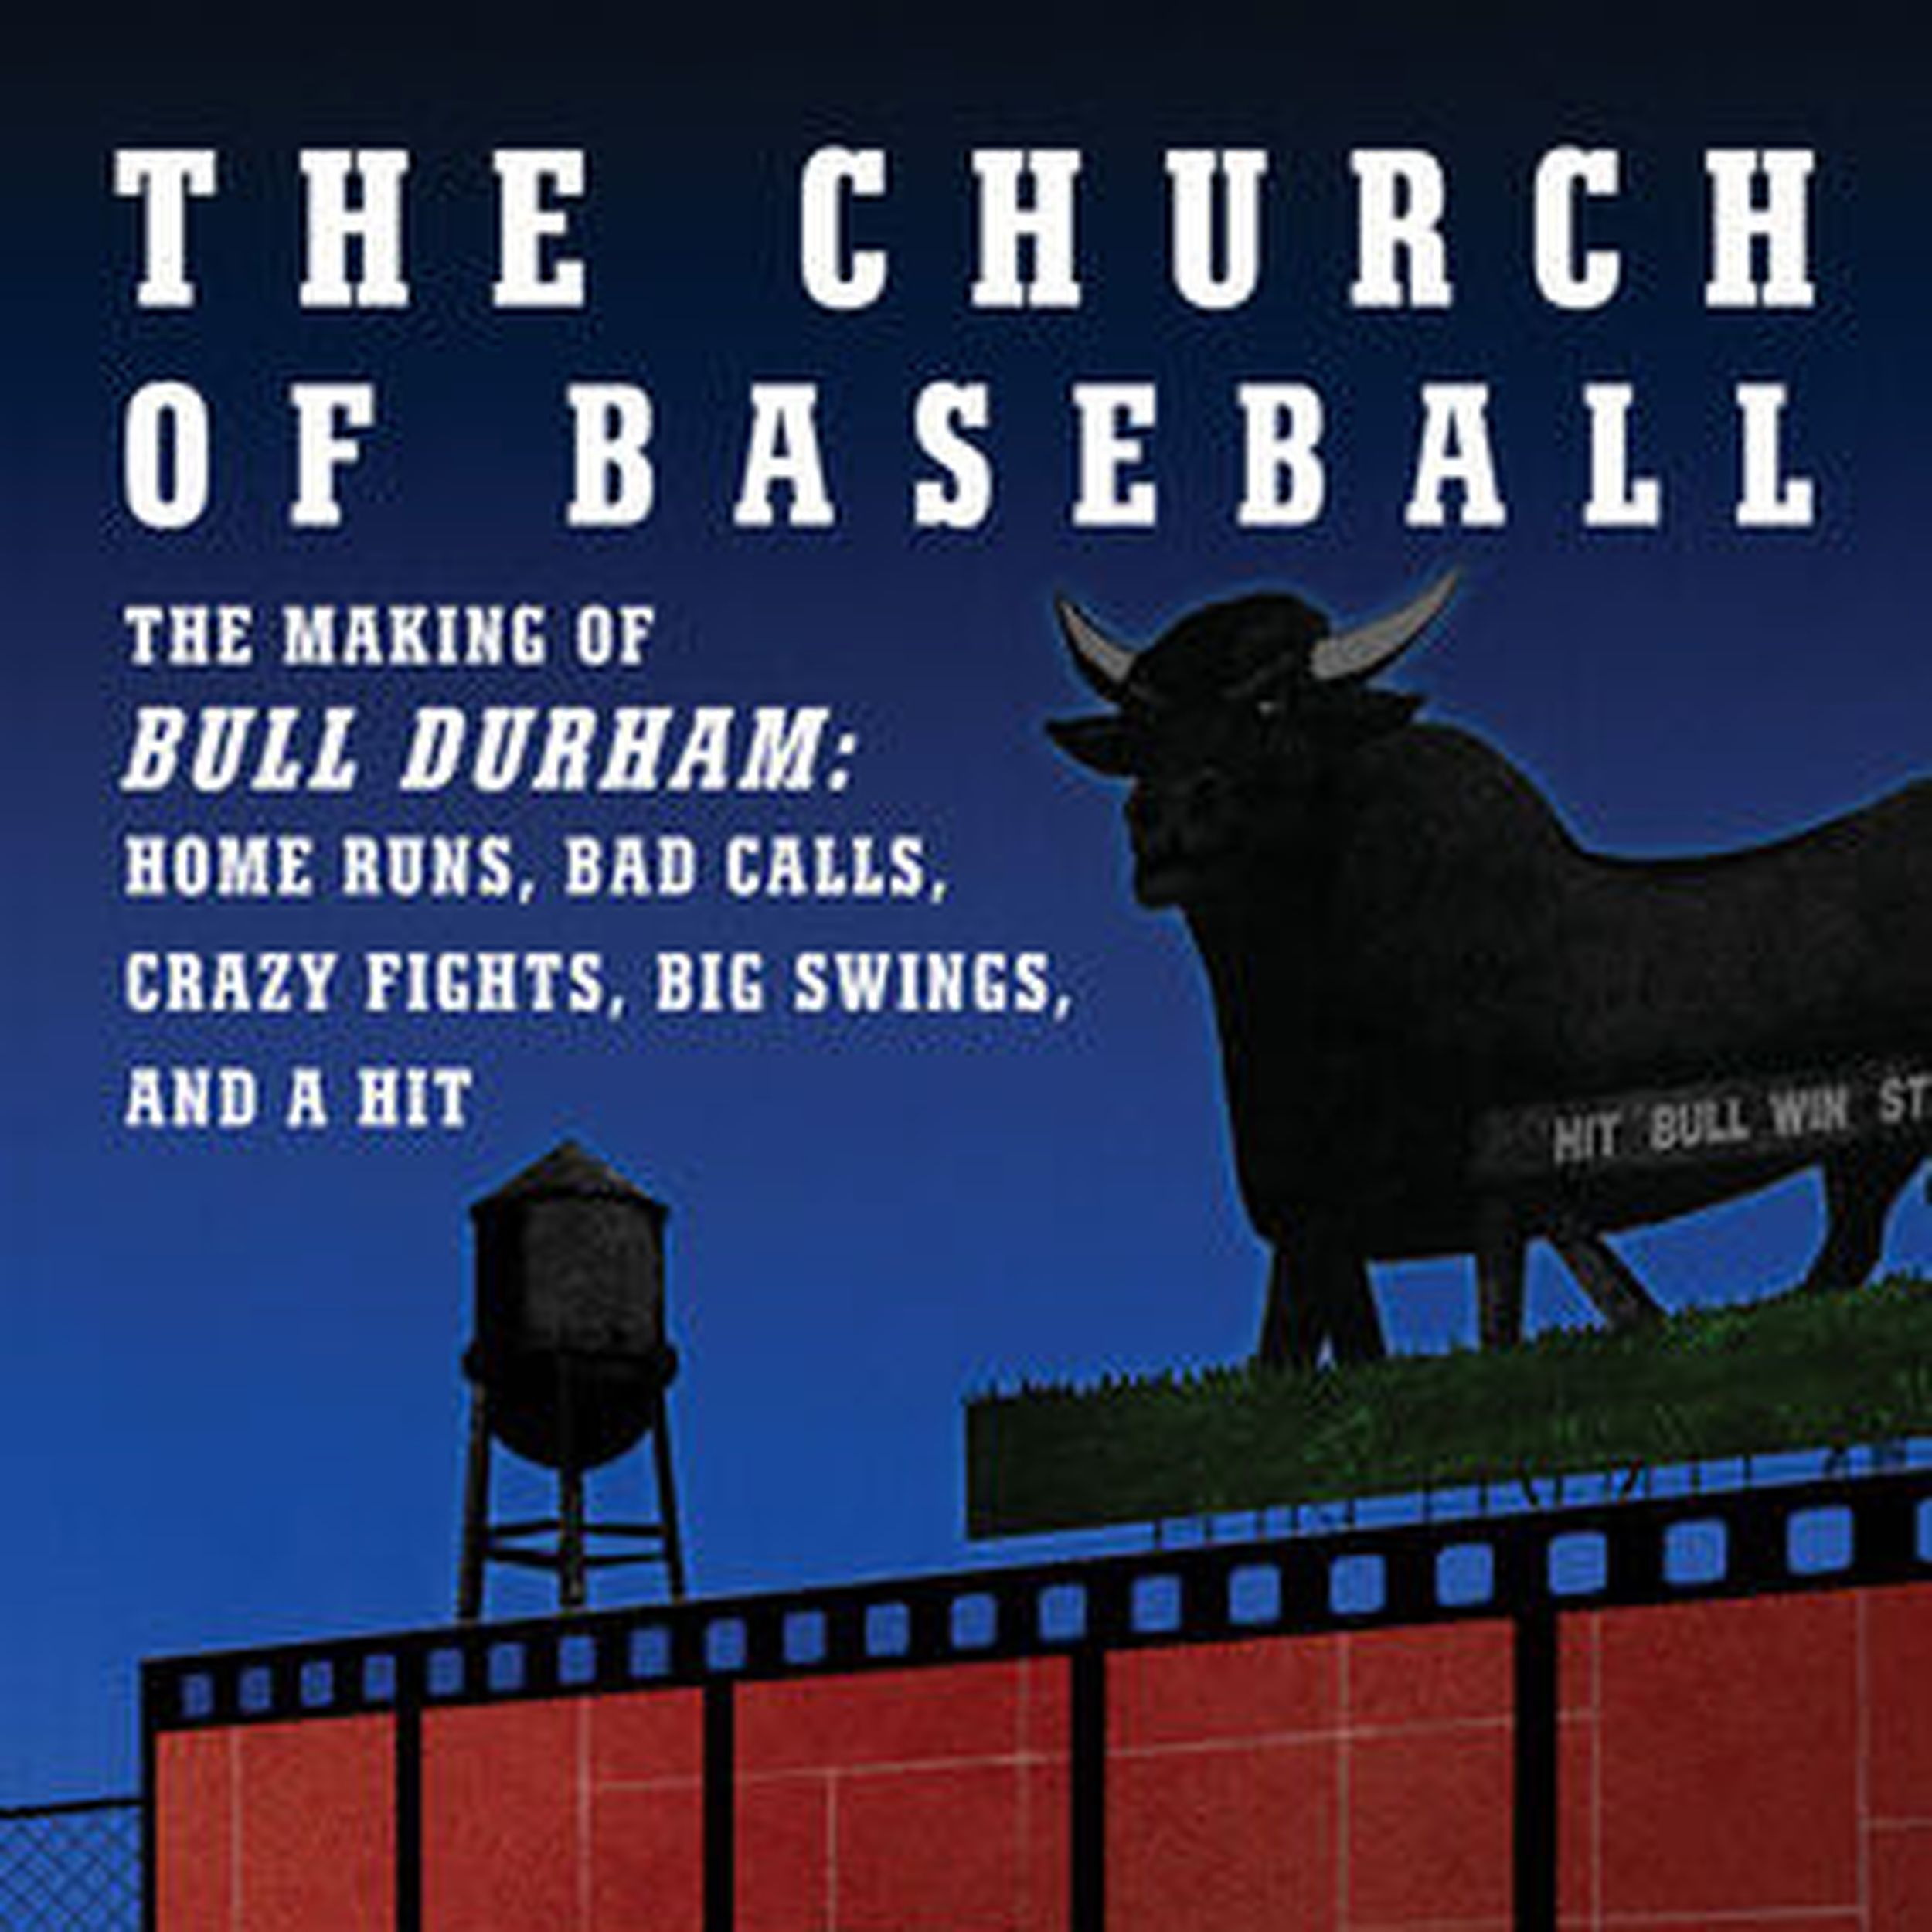 Bull Durham' writer-director writes memoir 'The Church of Baseball